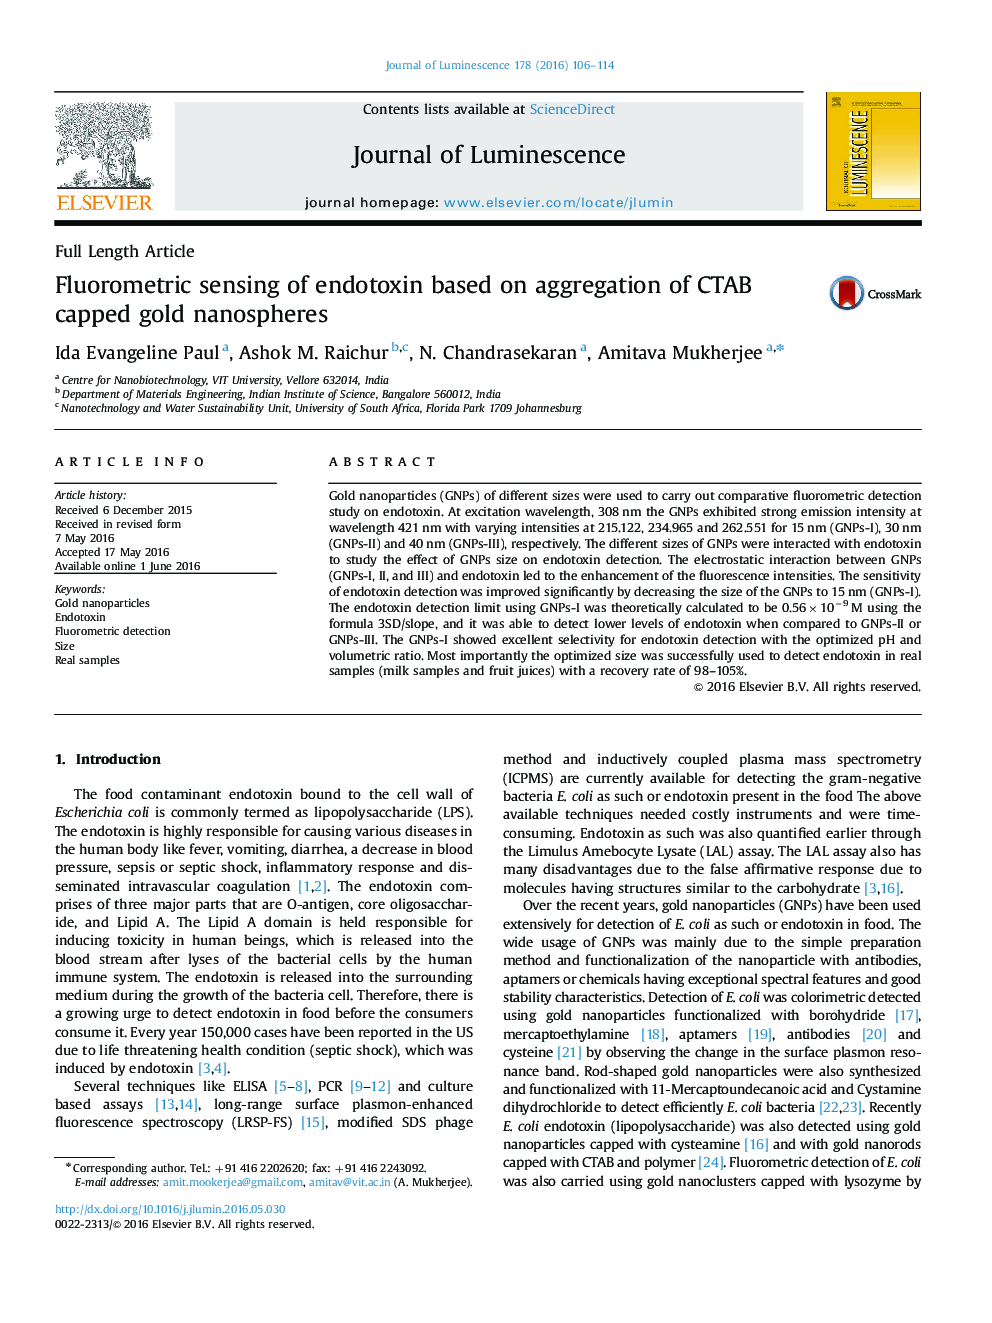 Fluorometric sensing of endotoxin based on aggregation of CTAB capped gold nanospheres